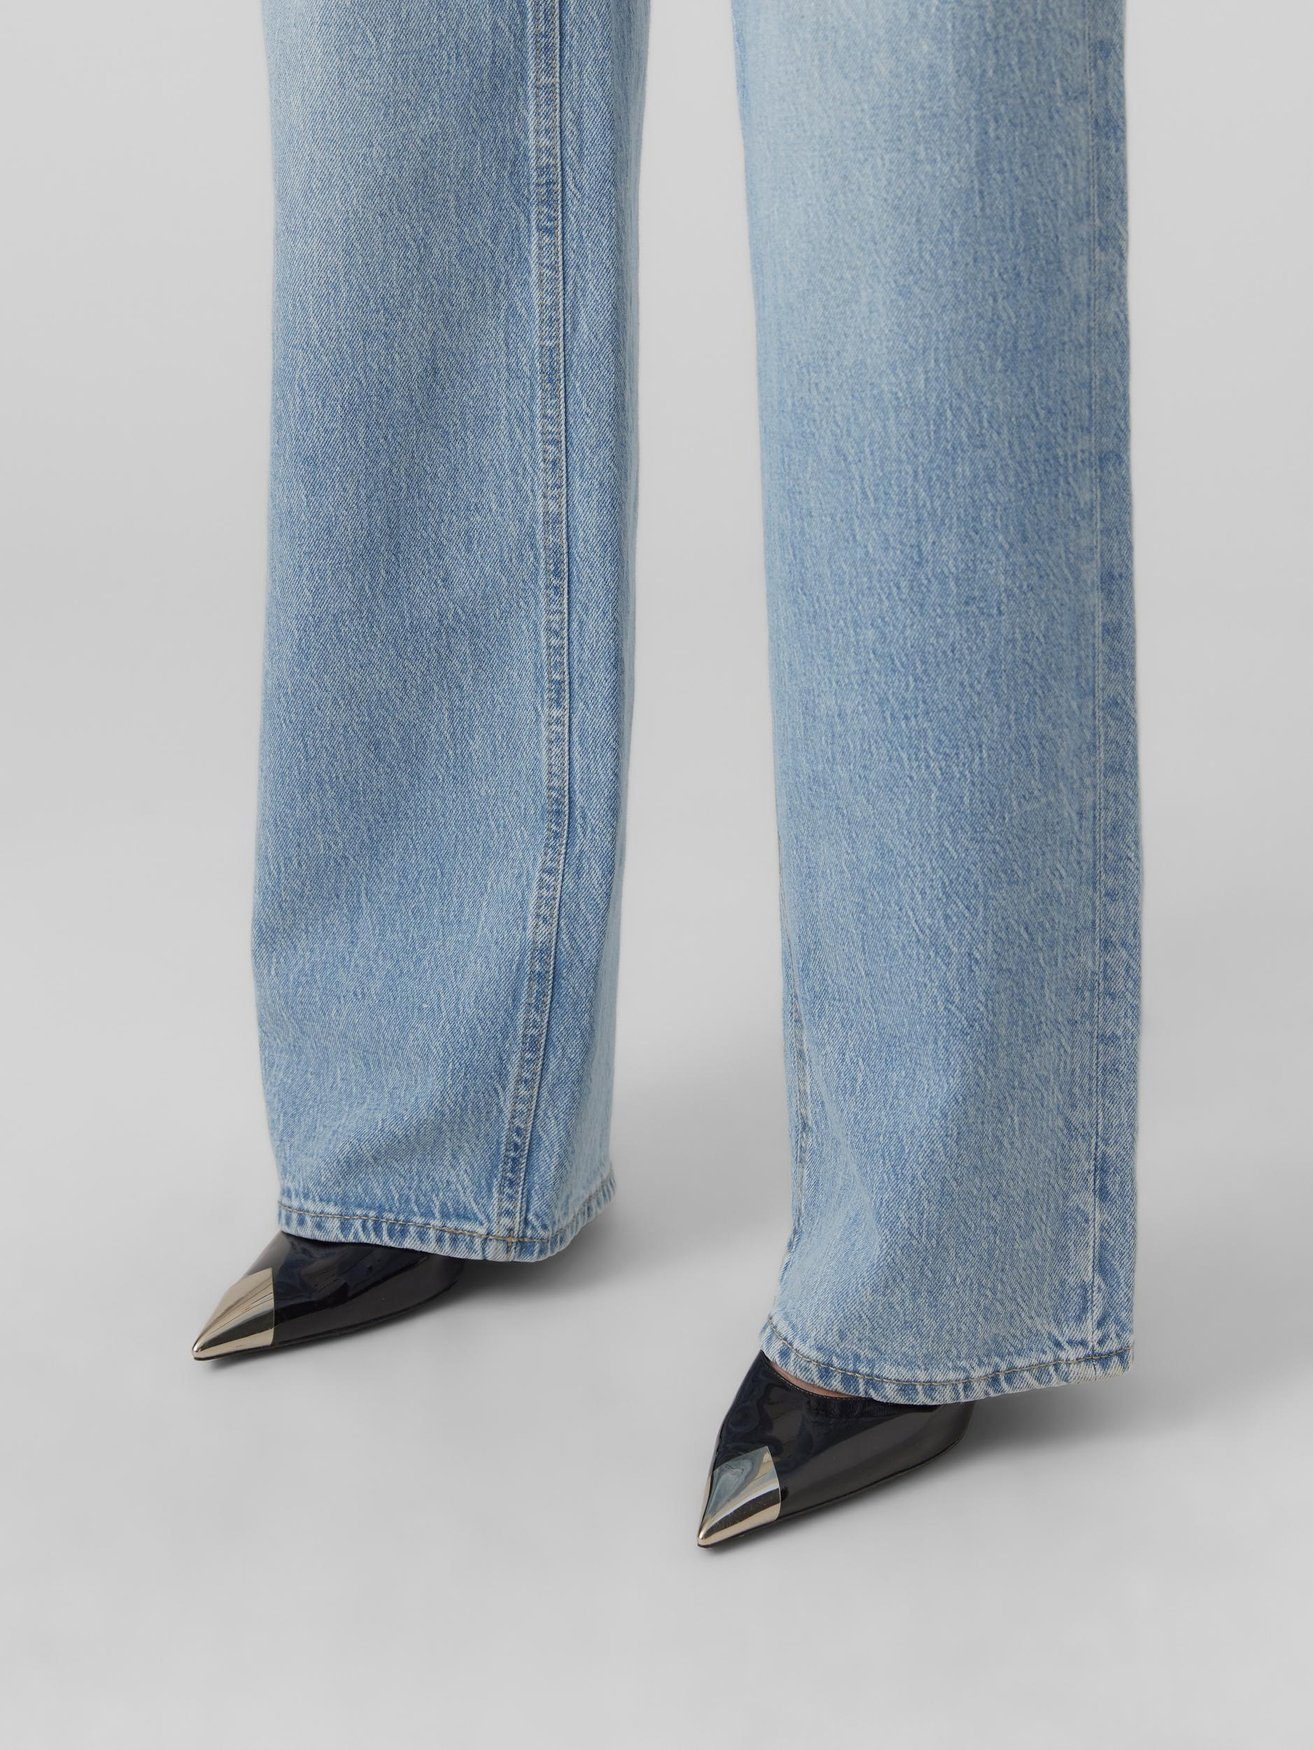 Denim Vero Hellblau Jeans in VMTESSA Straight Washed Schlagjeans Moda Stone Fit 5973